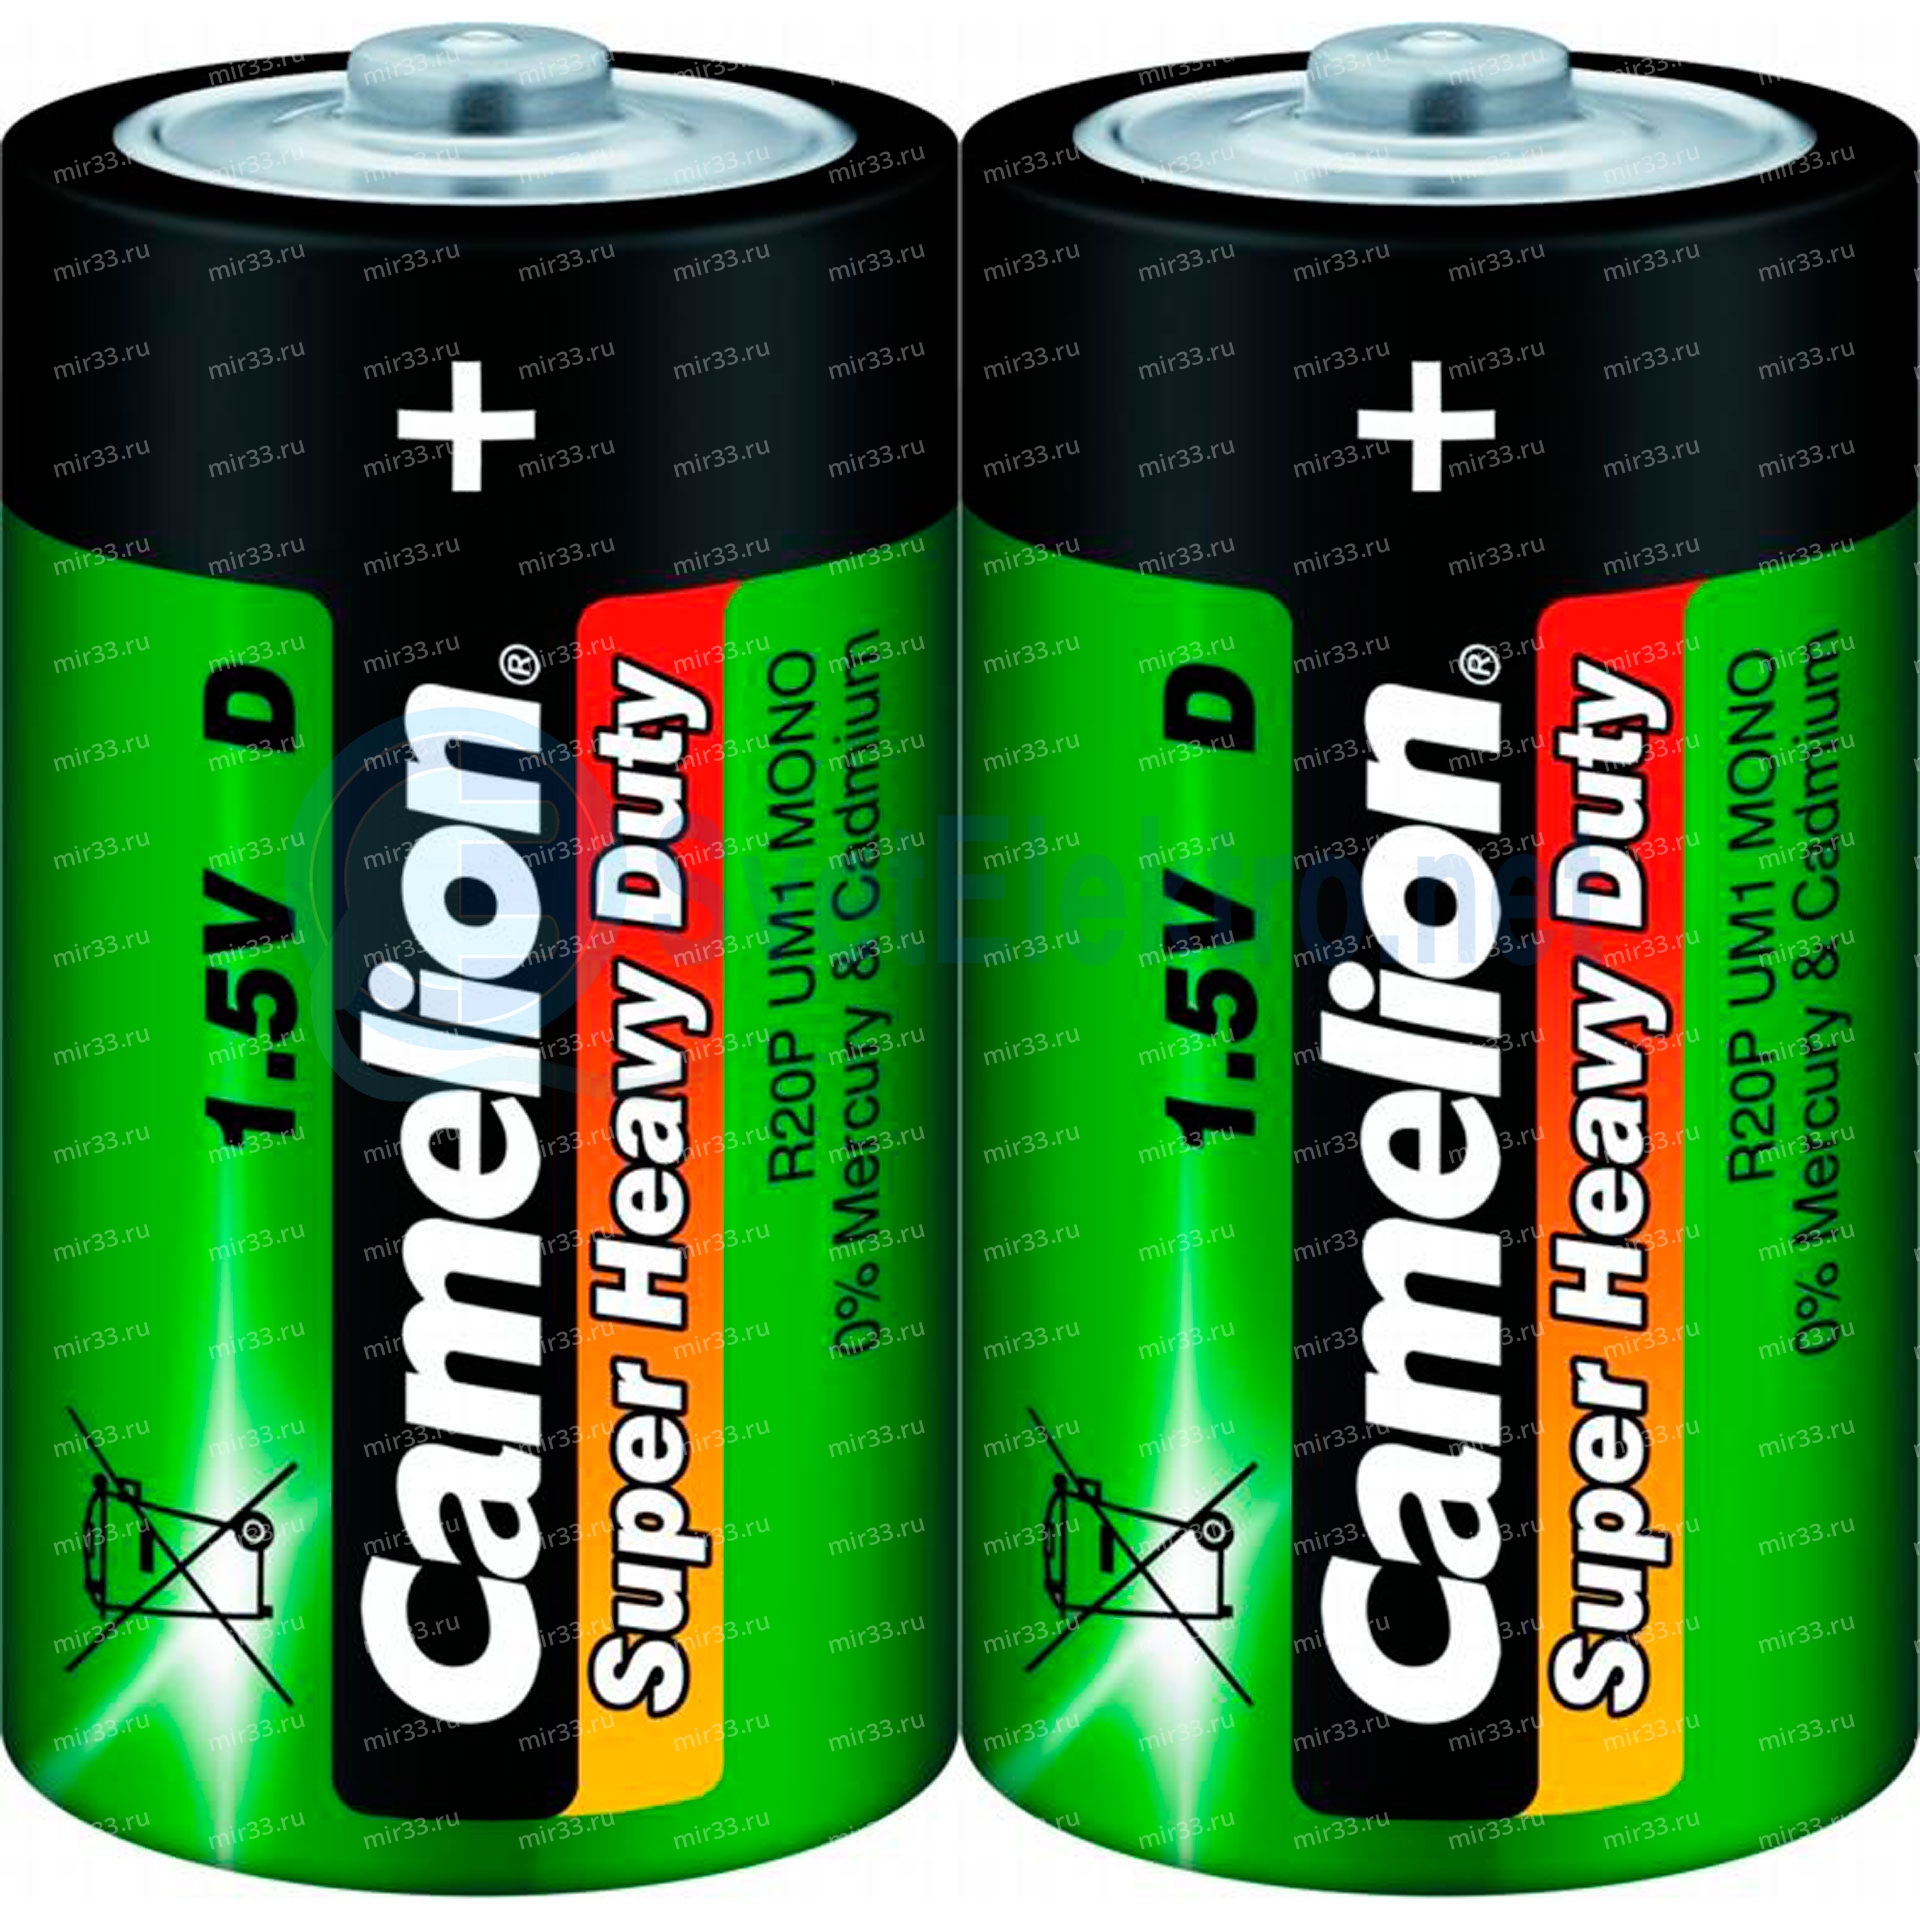 C batteries. Батарейка Camelion r10p 1.5 v. Батарейка r10 1.5v. Батарейка r20 1.5v. Элемент питания Camelion r10.